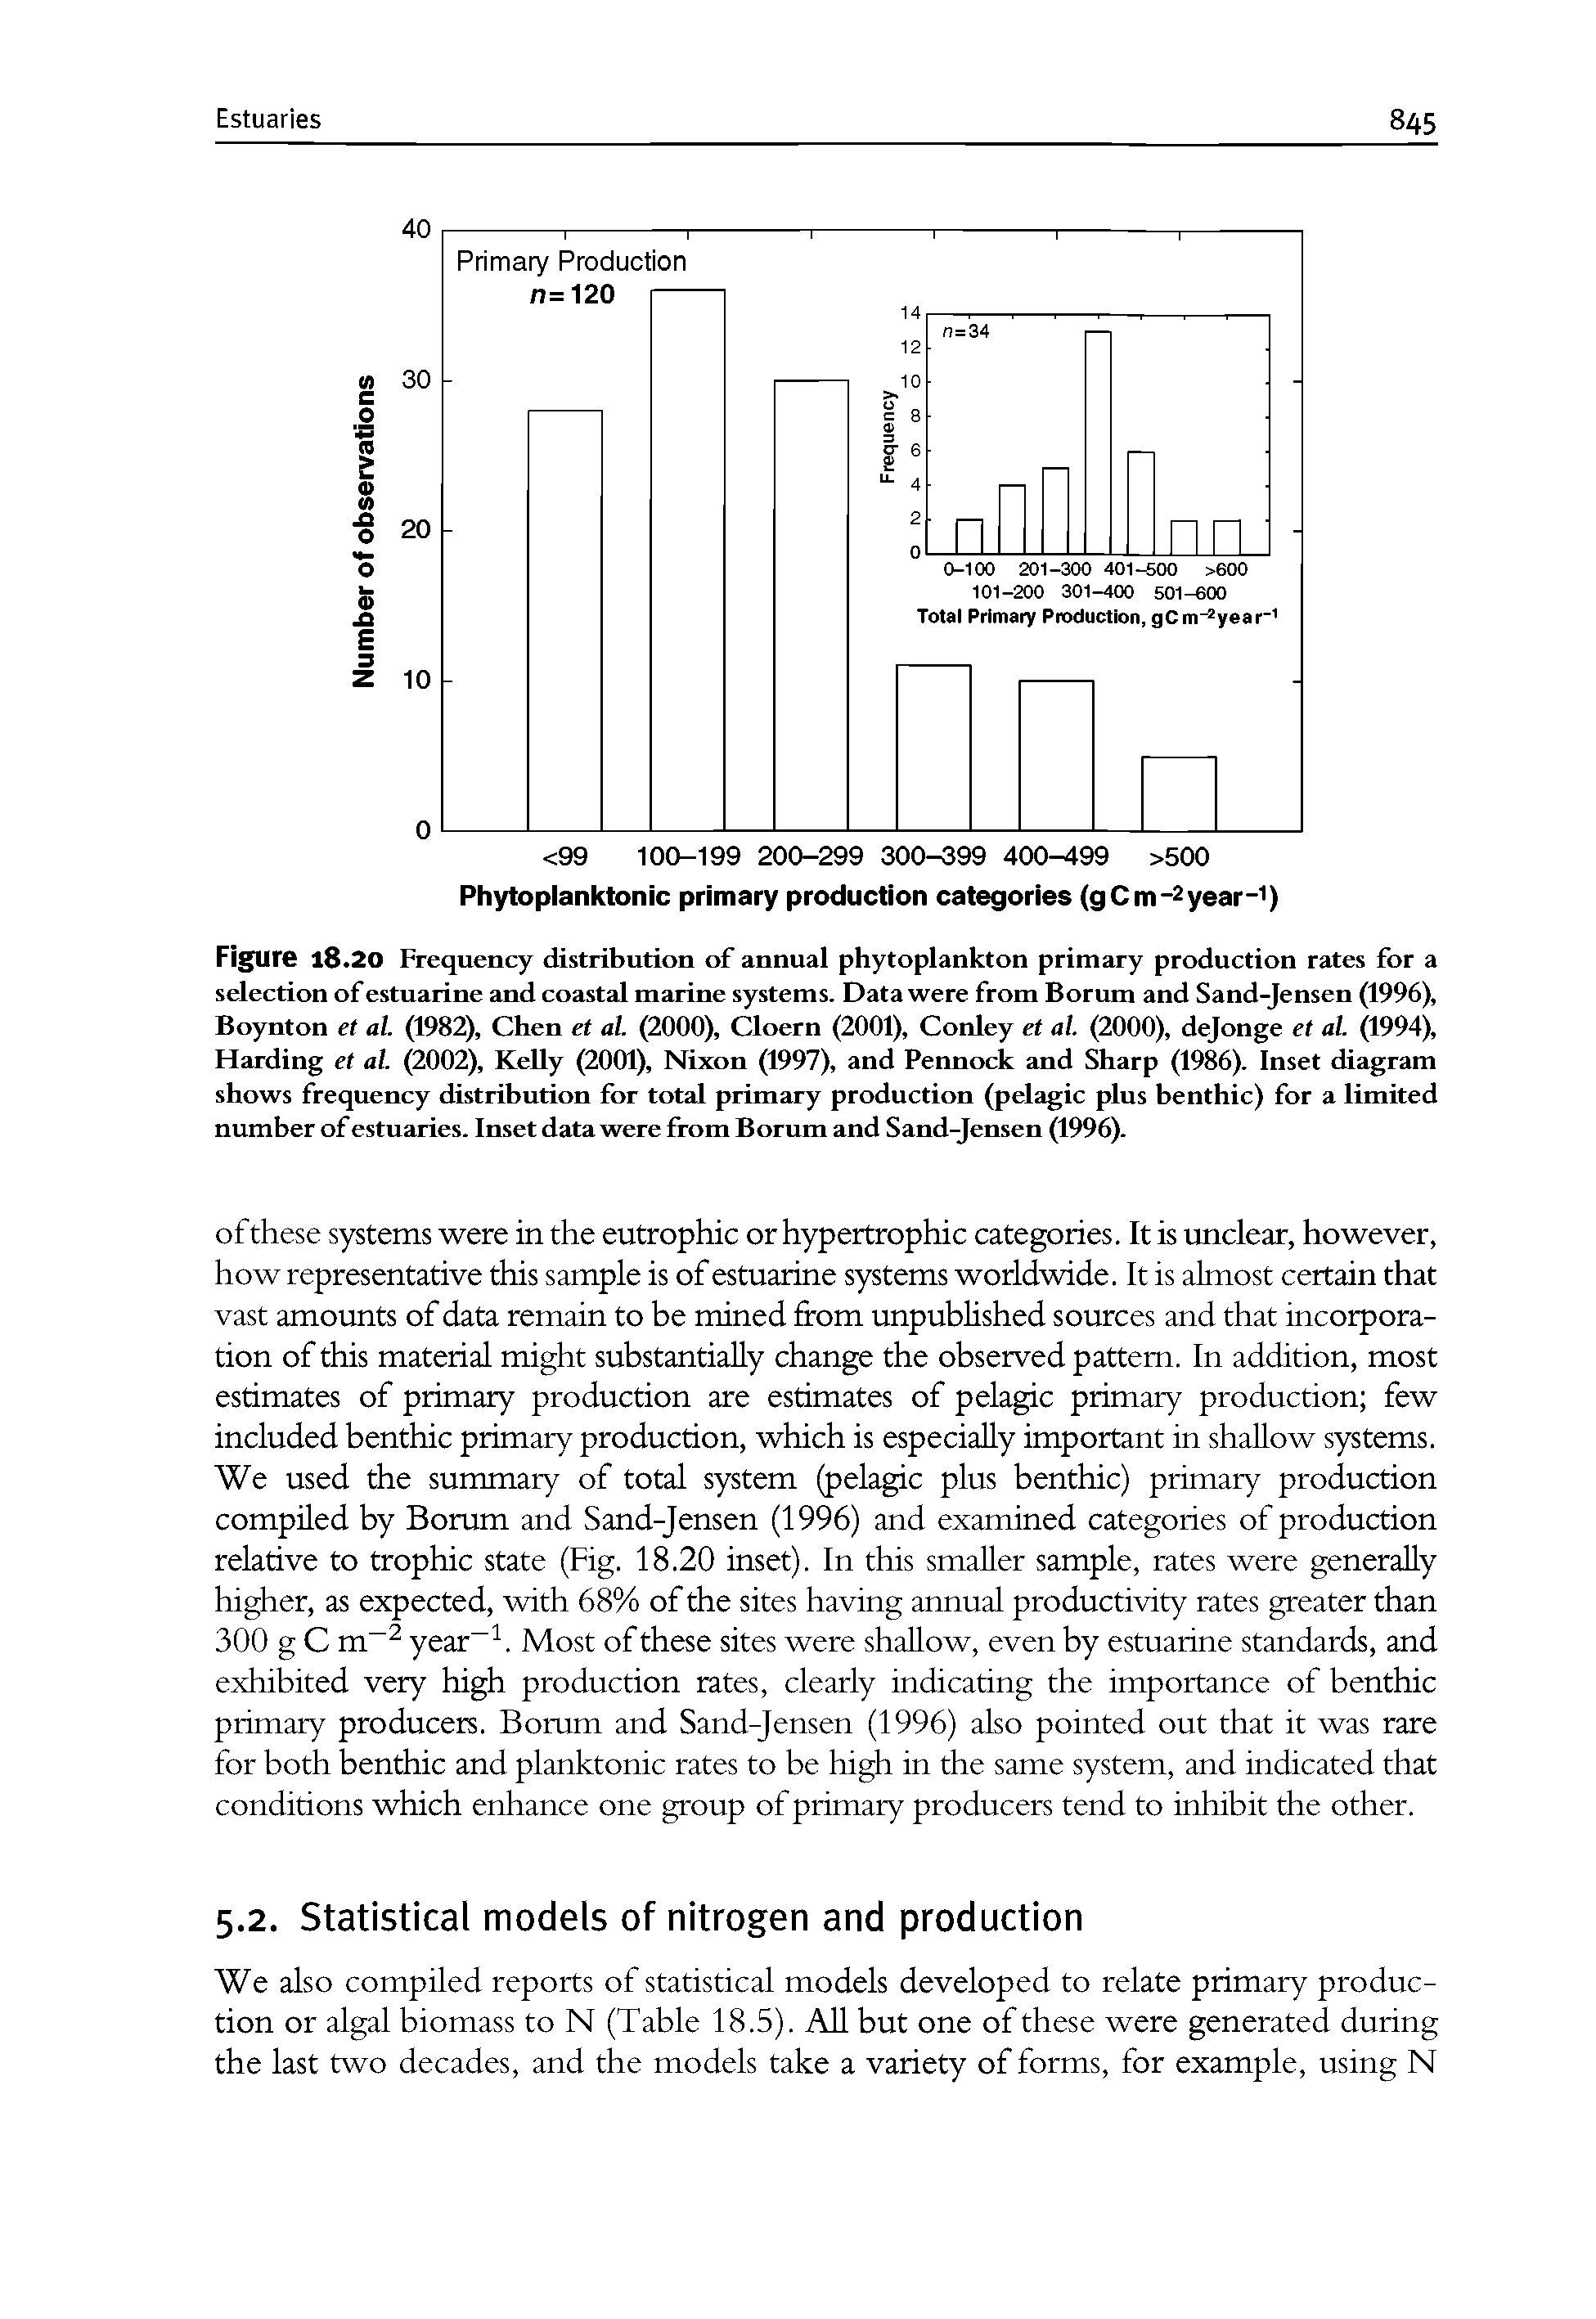 Figure 18.20 Frequency distribution of annual phytoplankton primary production rates for a selection of estuarine and coastal marine systems. Dataware from Borum and Sand-Jensen (1996), Boynton et al. (1982), Chen et al. (2000), Cloern (2001), Conley et al. (2000), dejonge et al. (1994), Harding et al. (2002), Kelly (2001), Nixon (1997), and Pennock and Sharp (1986). Inset diagram shows frequency distribution for total primary production (pelagic plus benthic) for a limited number of estuaries. Inset data were from Borum and Sand-Jensen (1996).